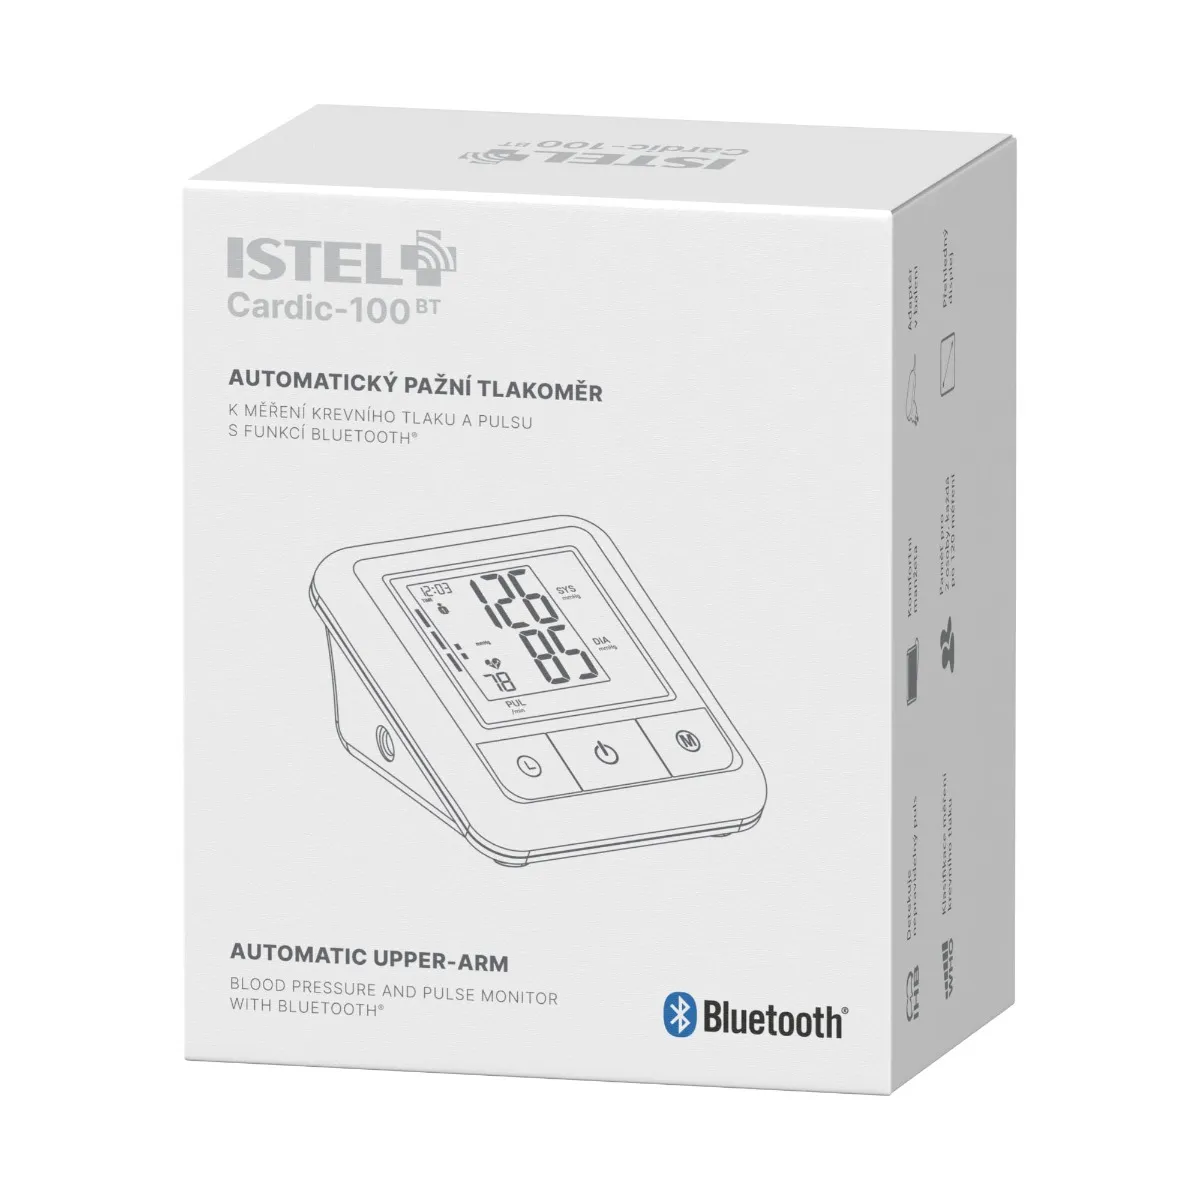 Biotter ISTEL Cardic-100 BT automatický tlakoměr